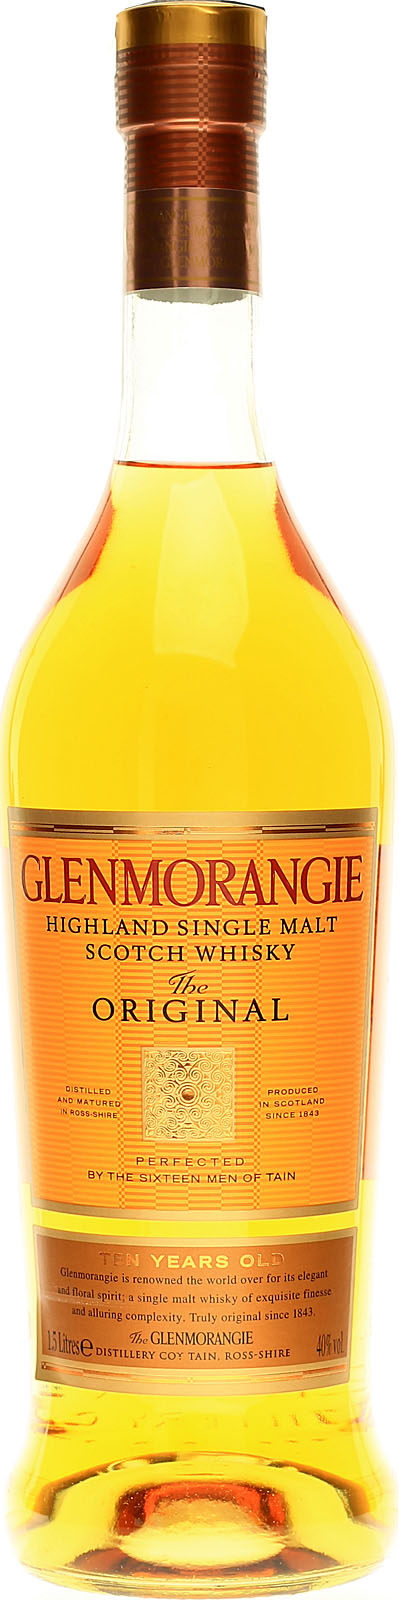 Glenmorangie The Original Magnum, Single Highland Malt